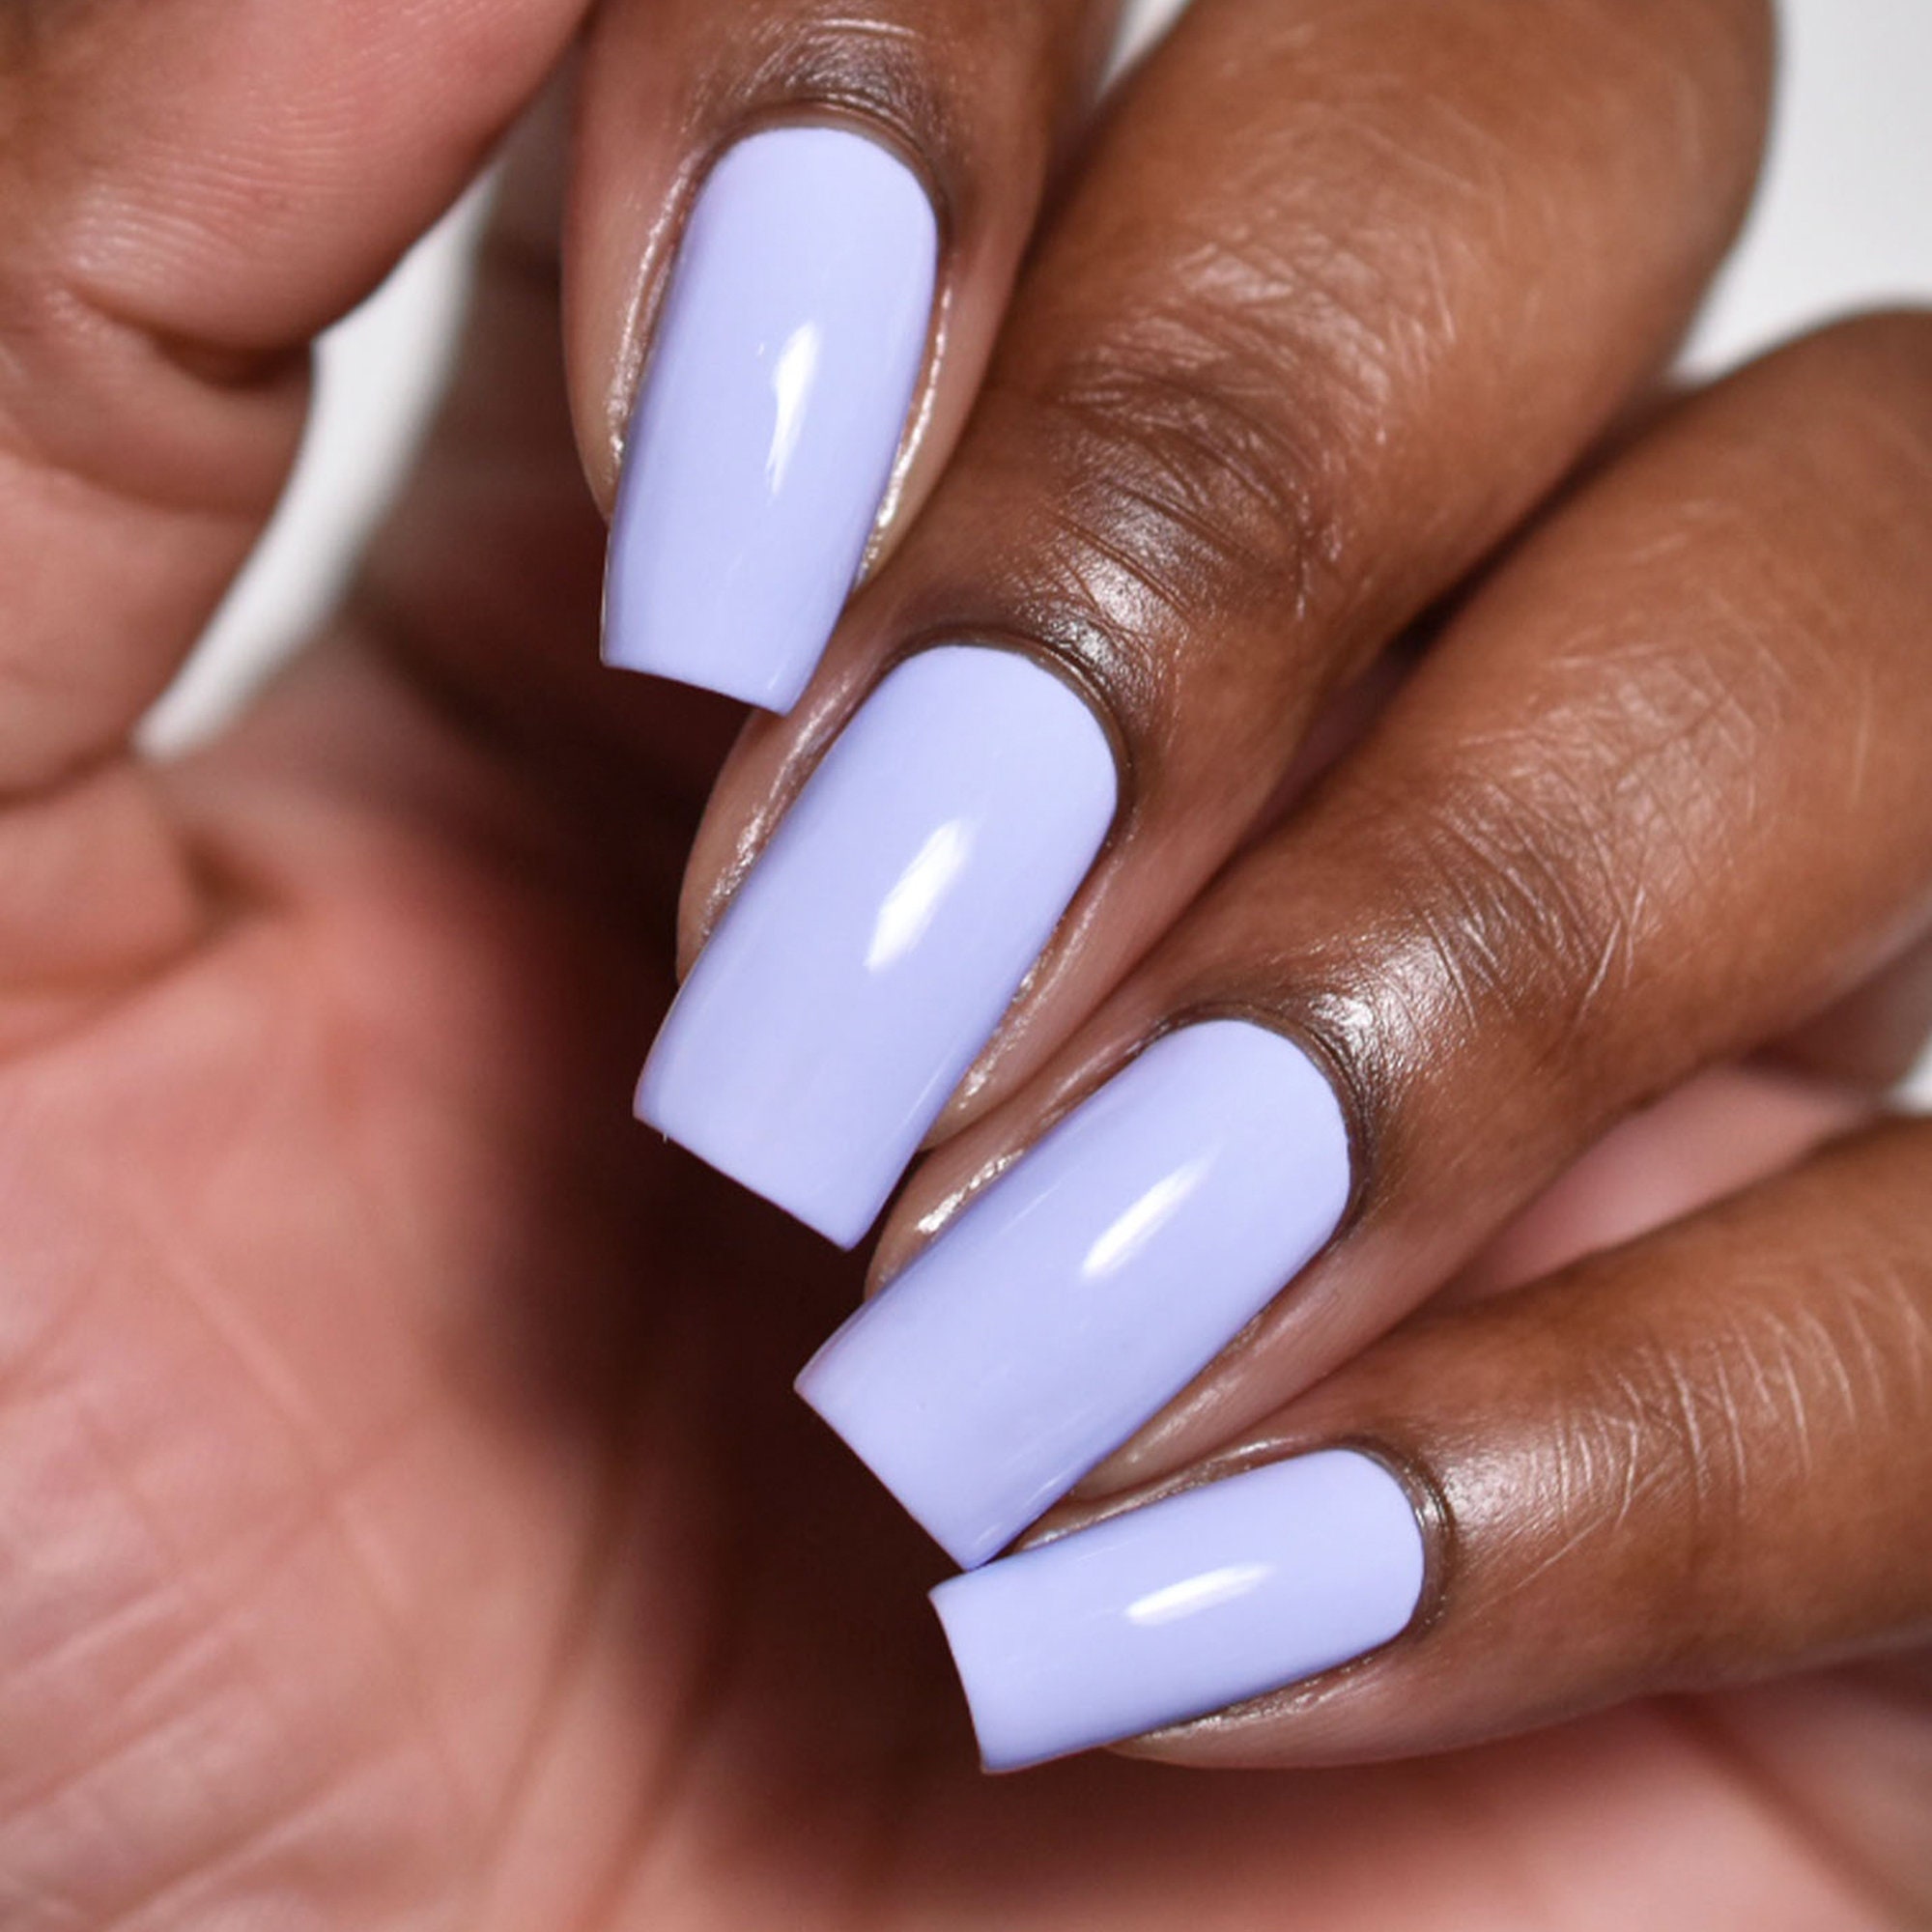 all access pass - blue purple nail polish & nail color - essie